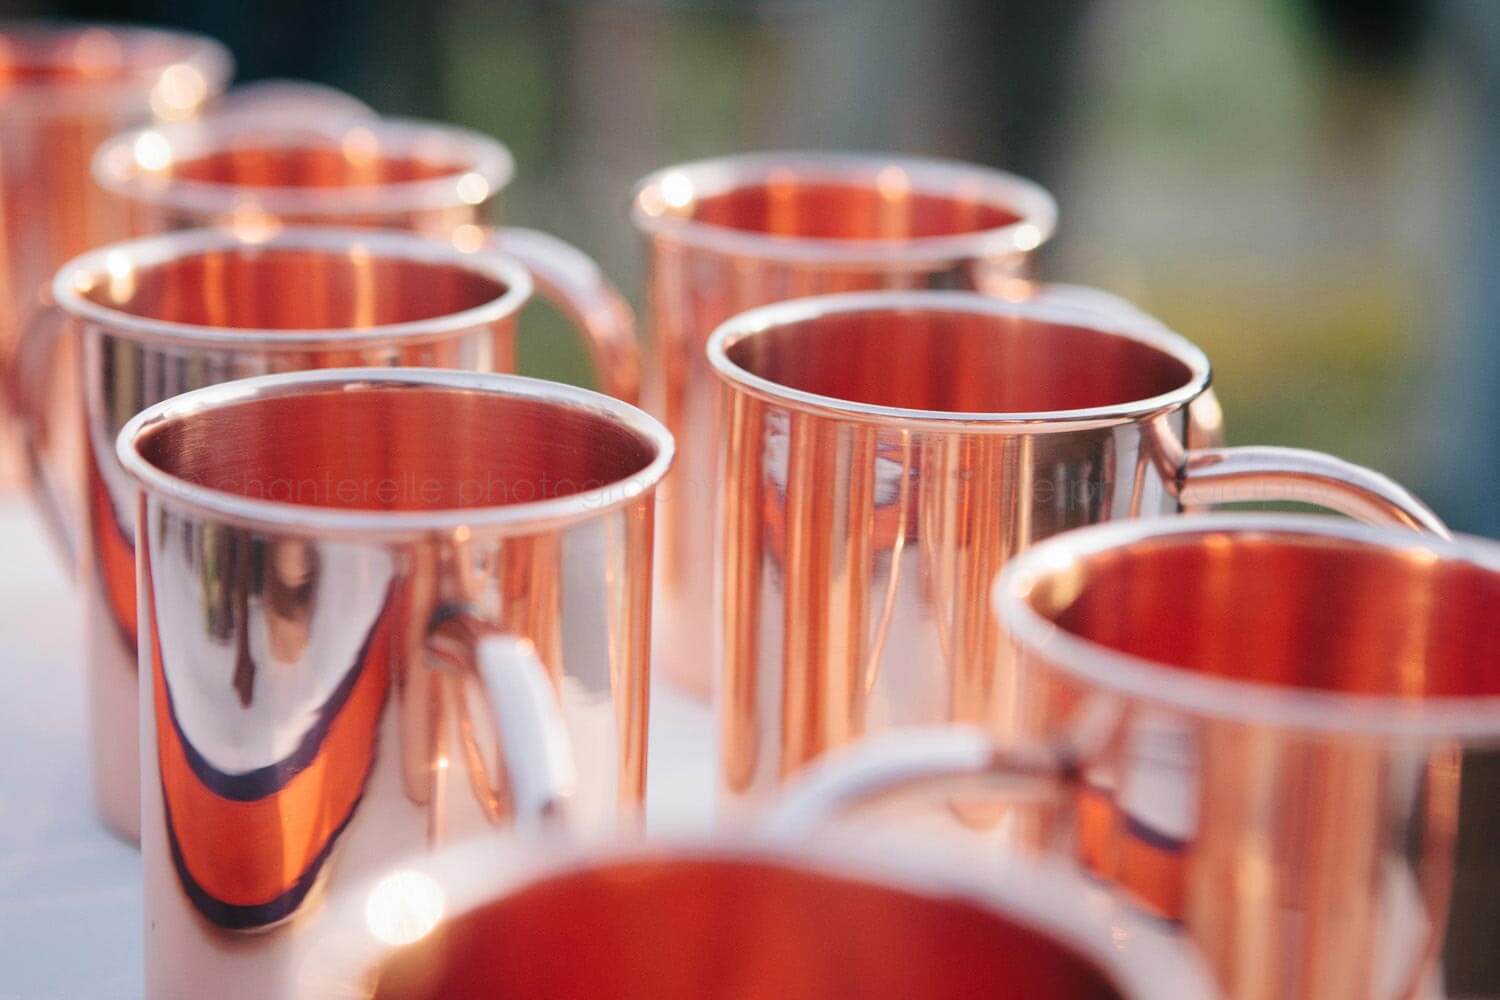 copper moscow mule mugs at alabama wedding reception